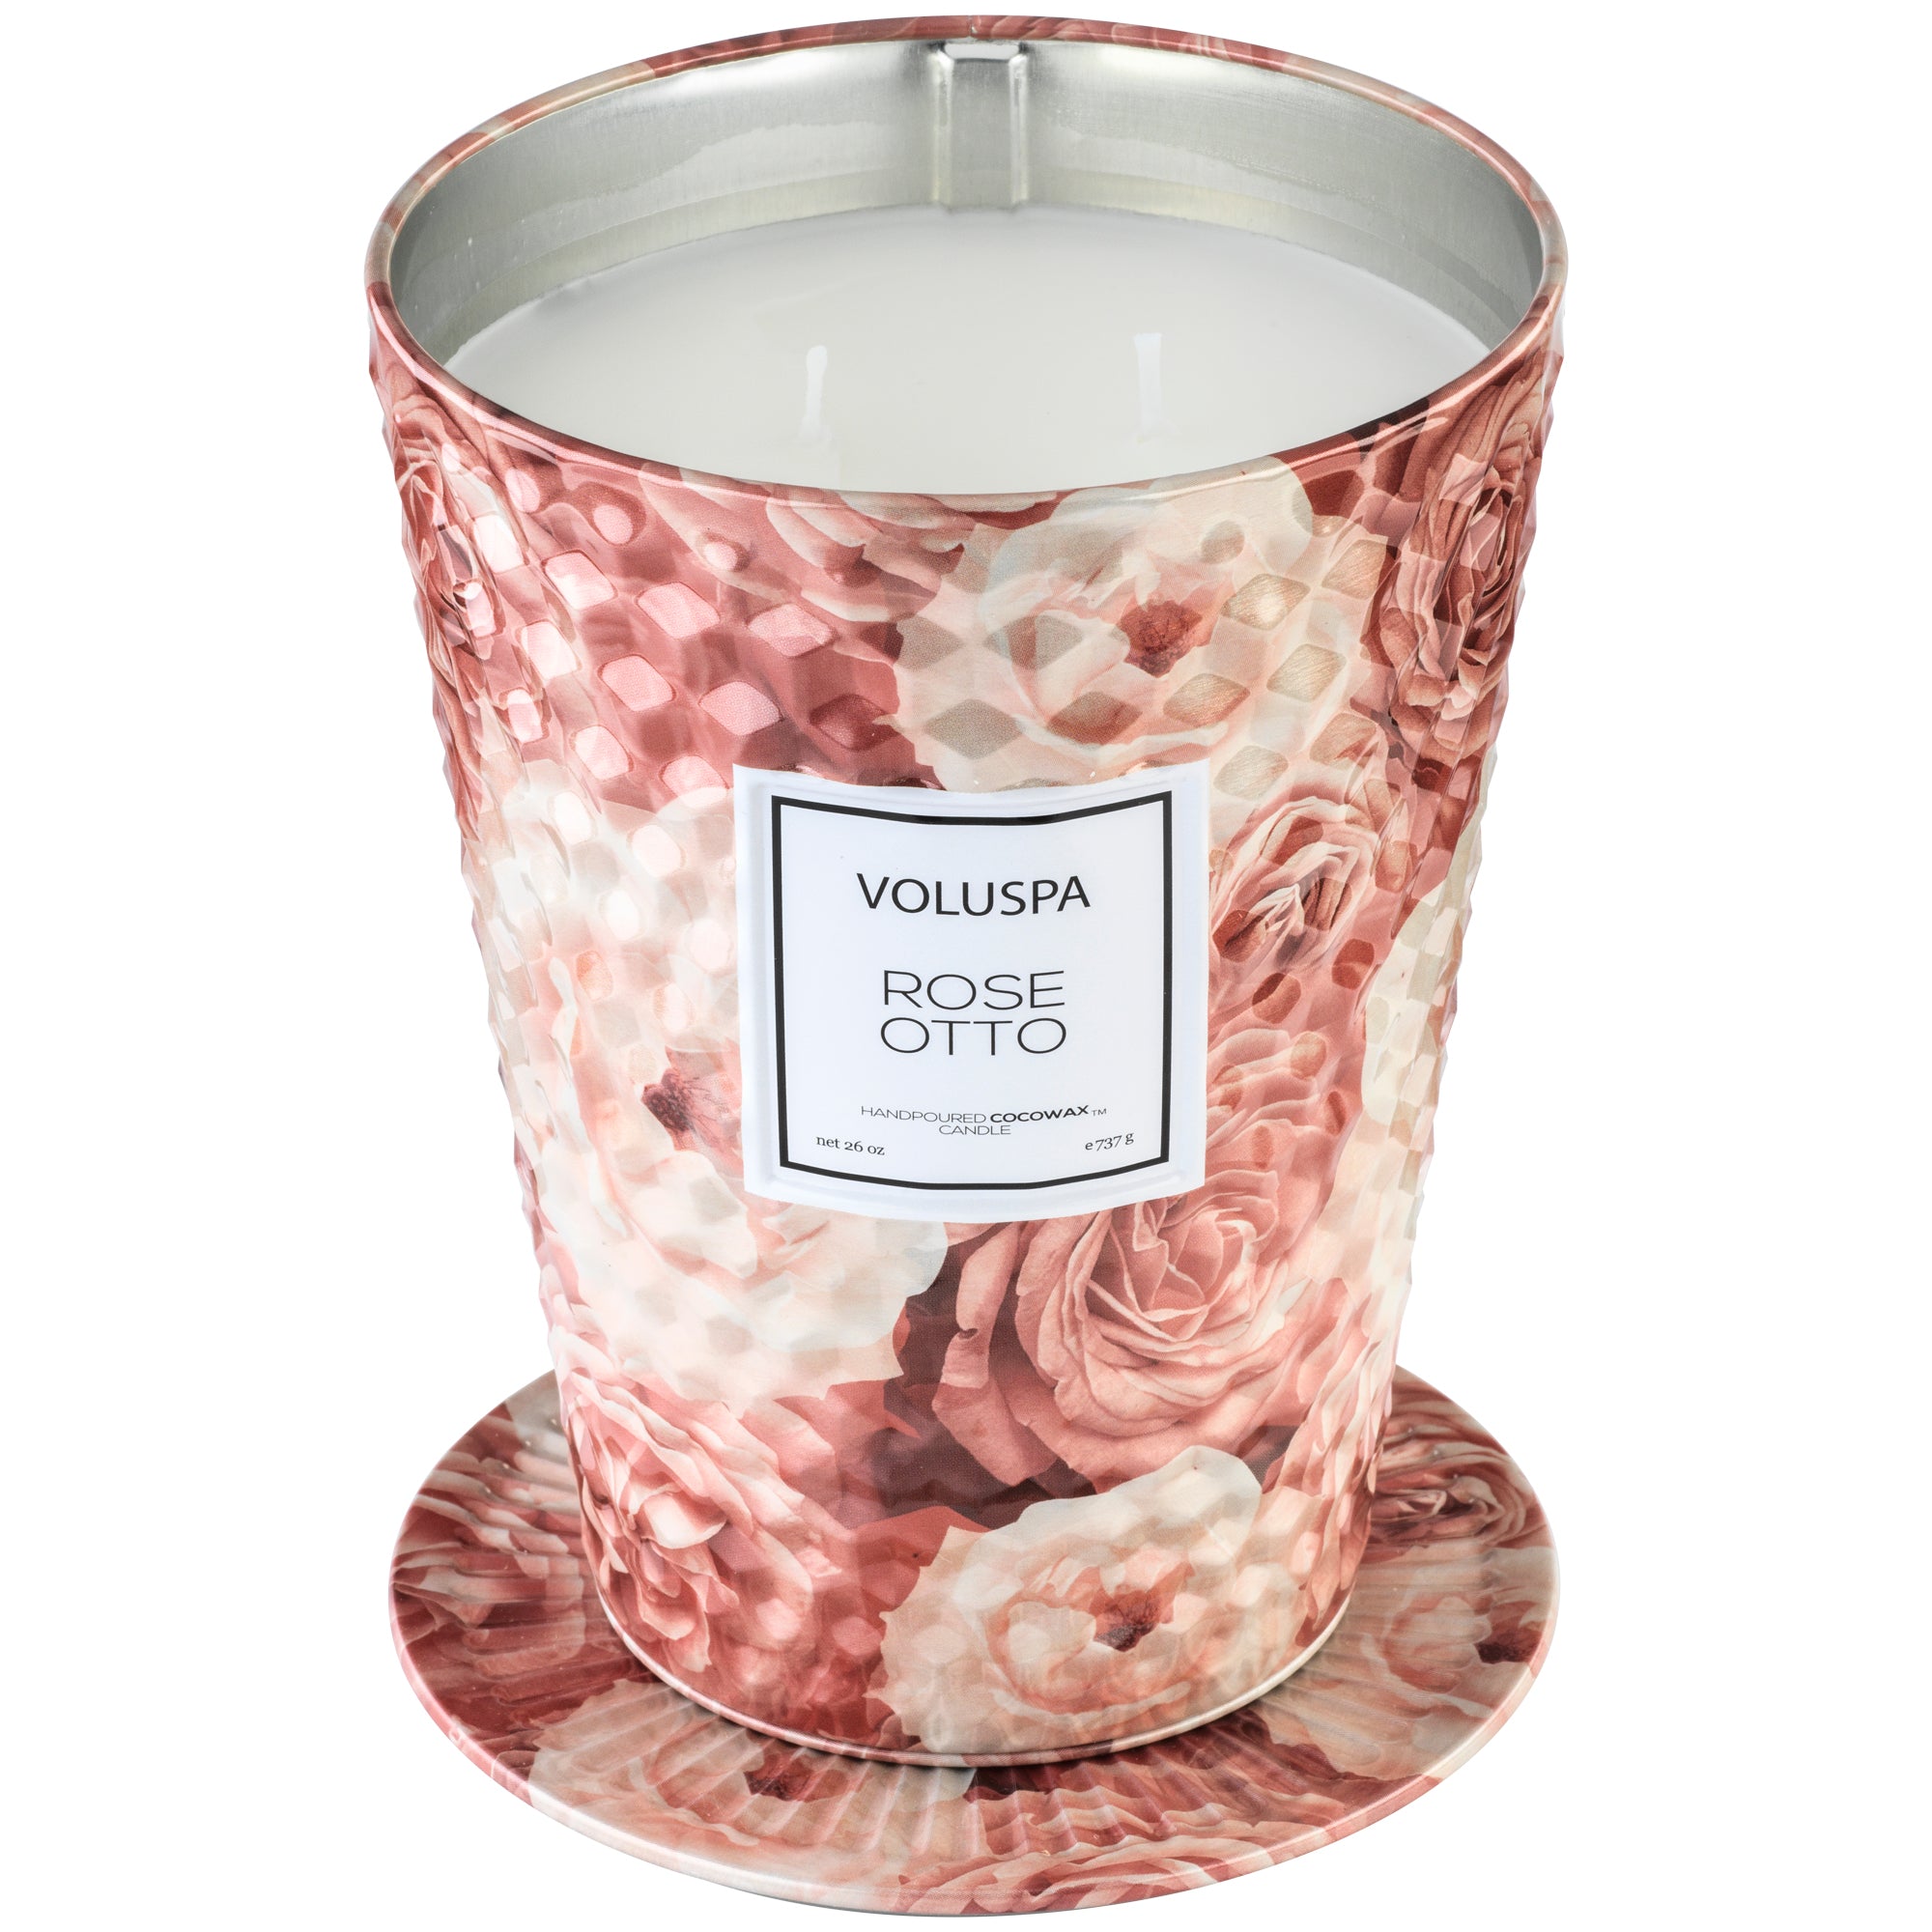 HÖSTKVÄLL Scented candle in metal cup, Cedar & magnolia/silver color, 2 -  IKEA